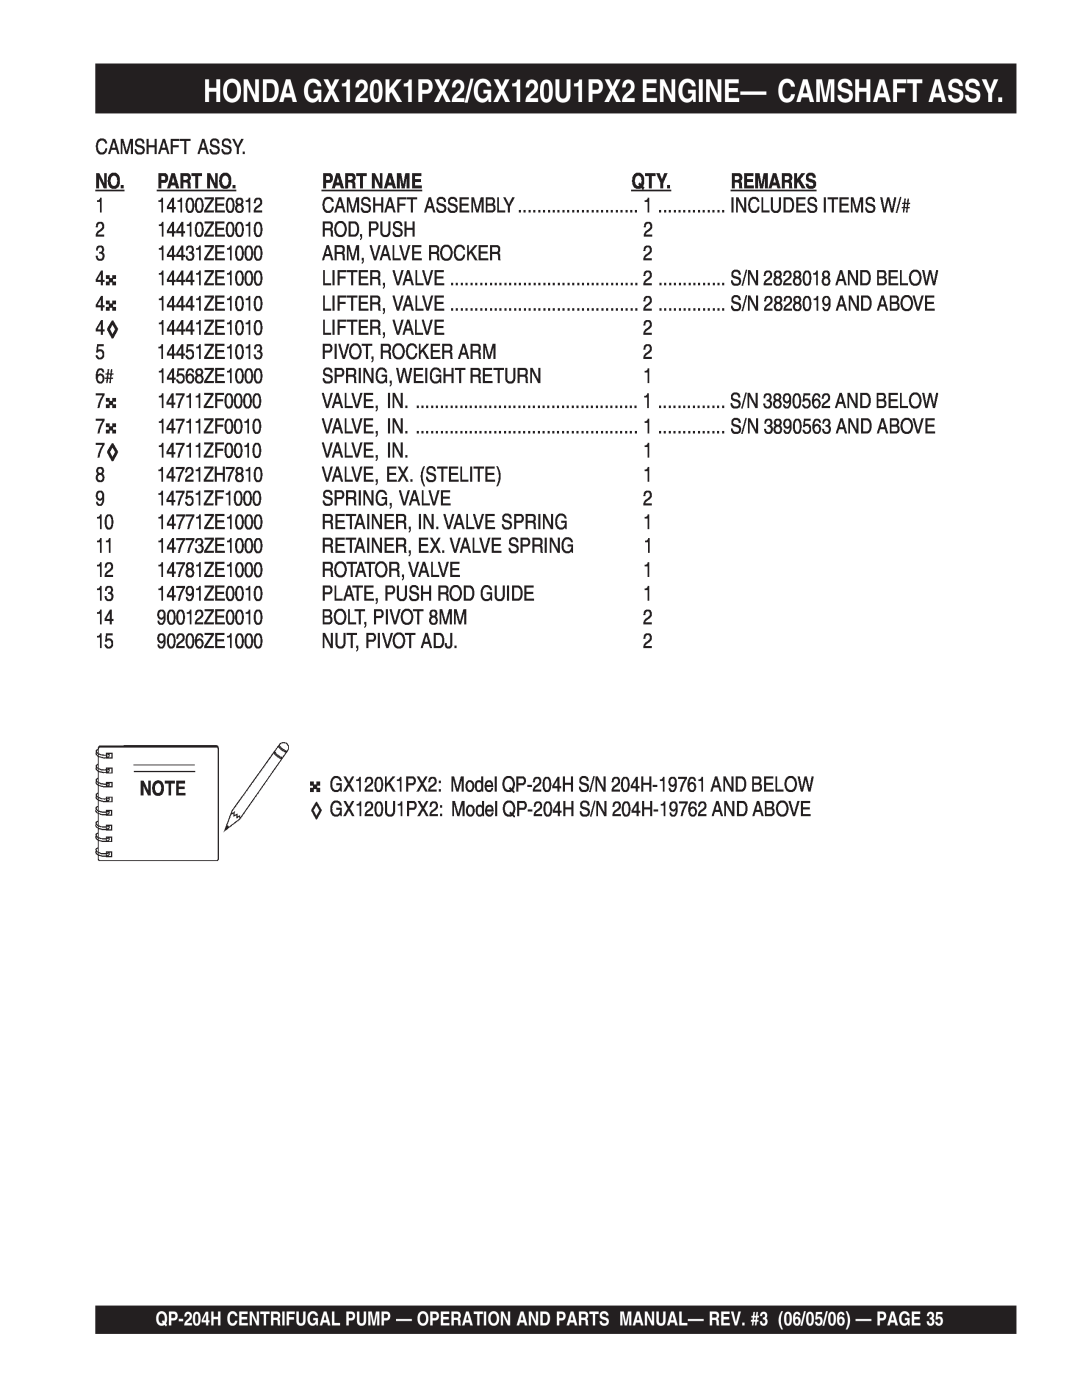 Multiquip QP-204H manual HONDA GX120K1PX2/GX120U1PX2 ENGINE- CAMSHAFT ASSY, Part Name, Remarks 